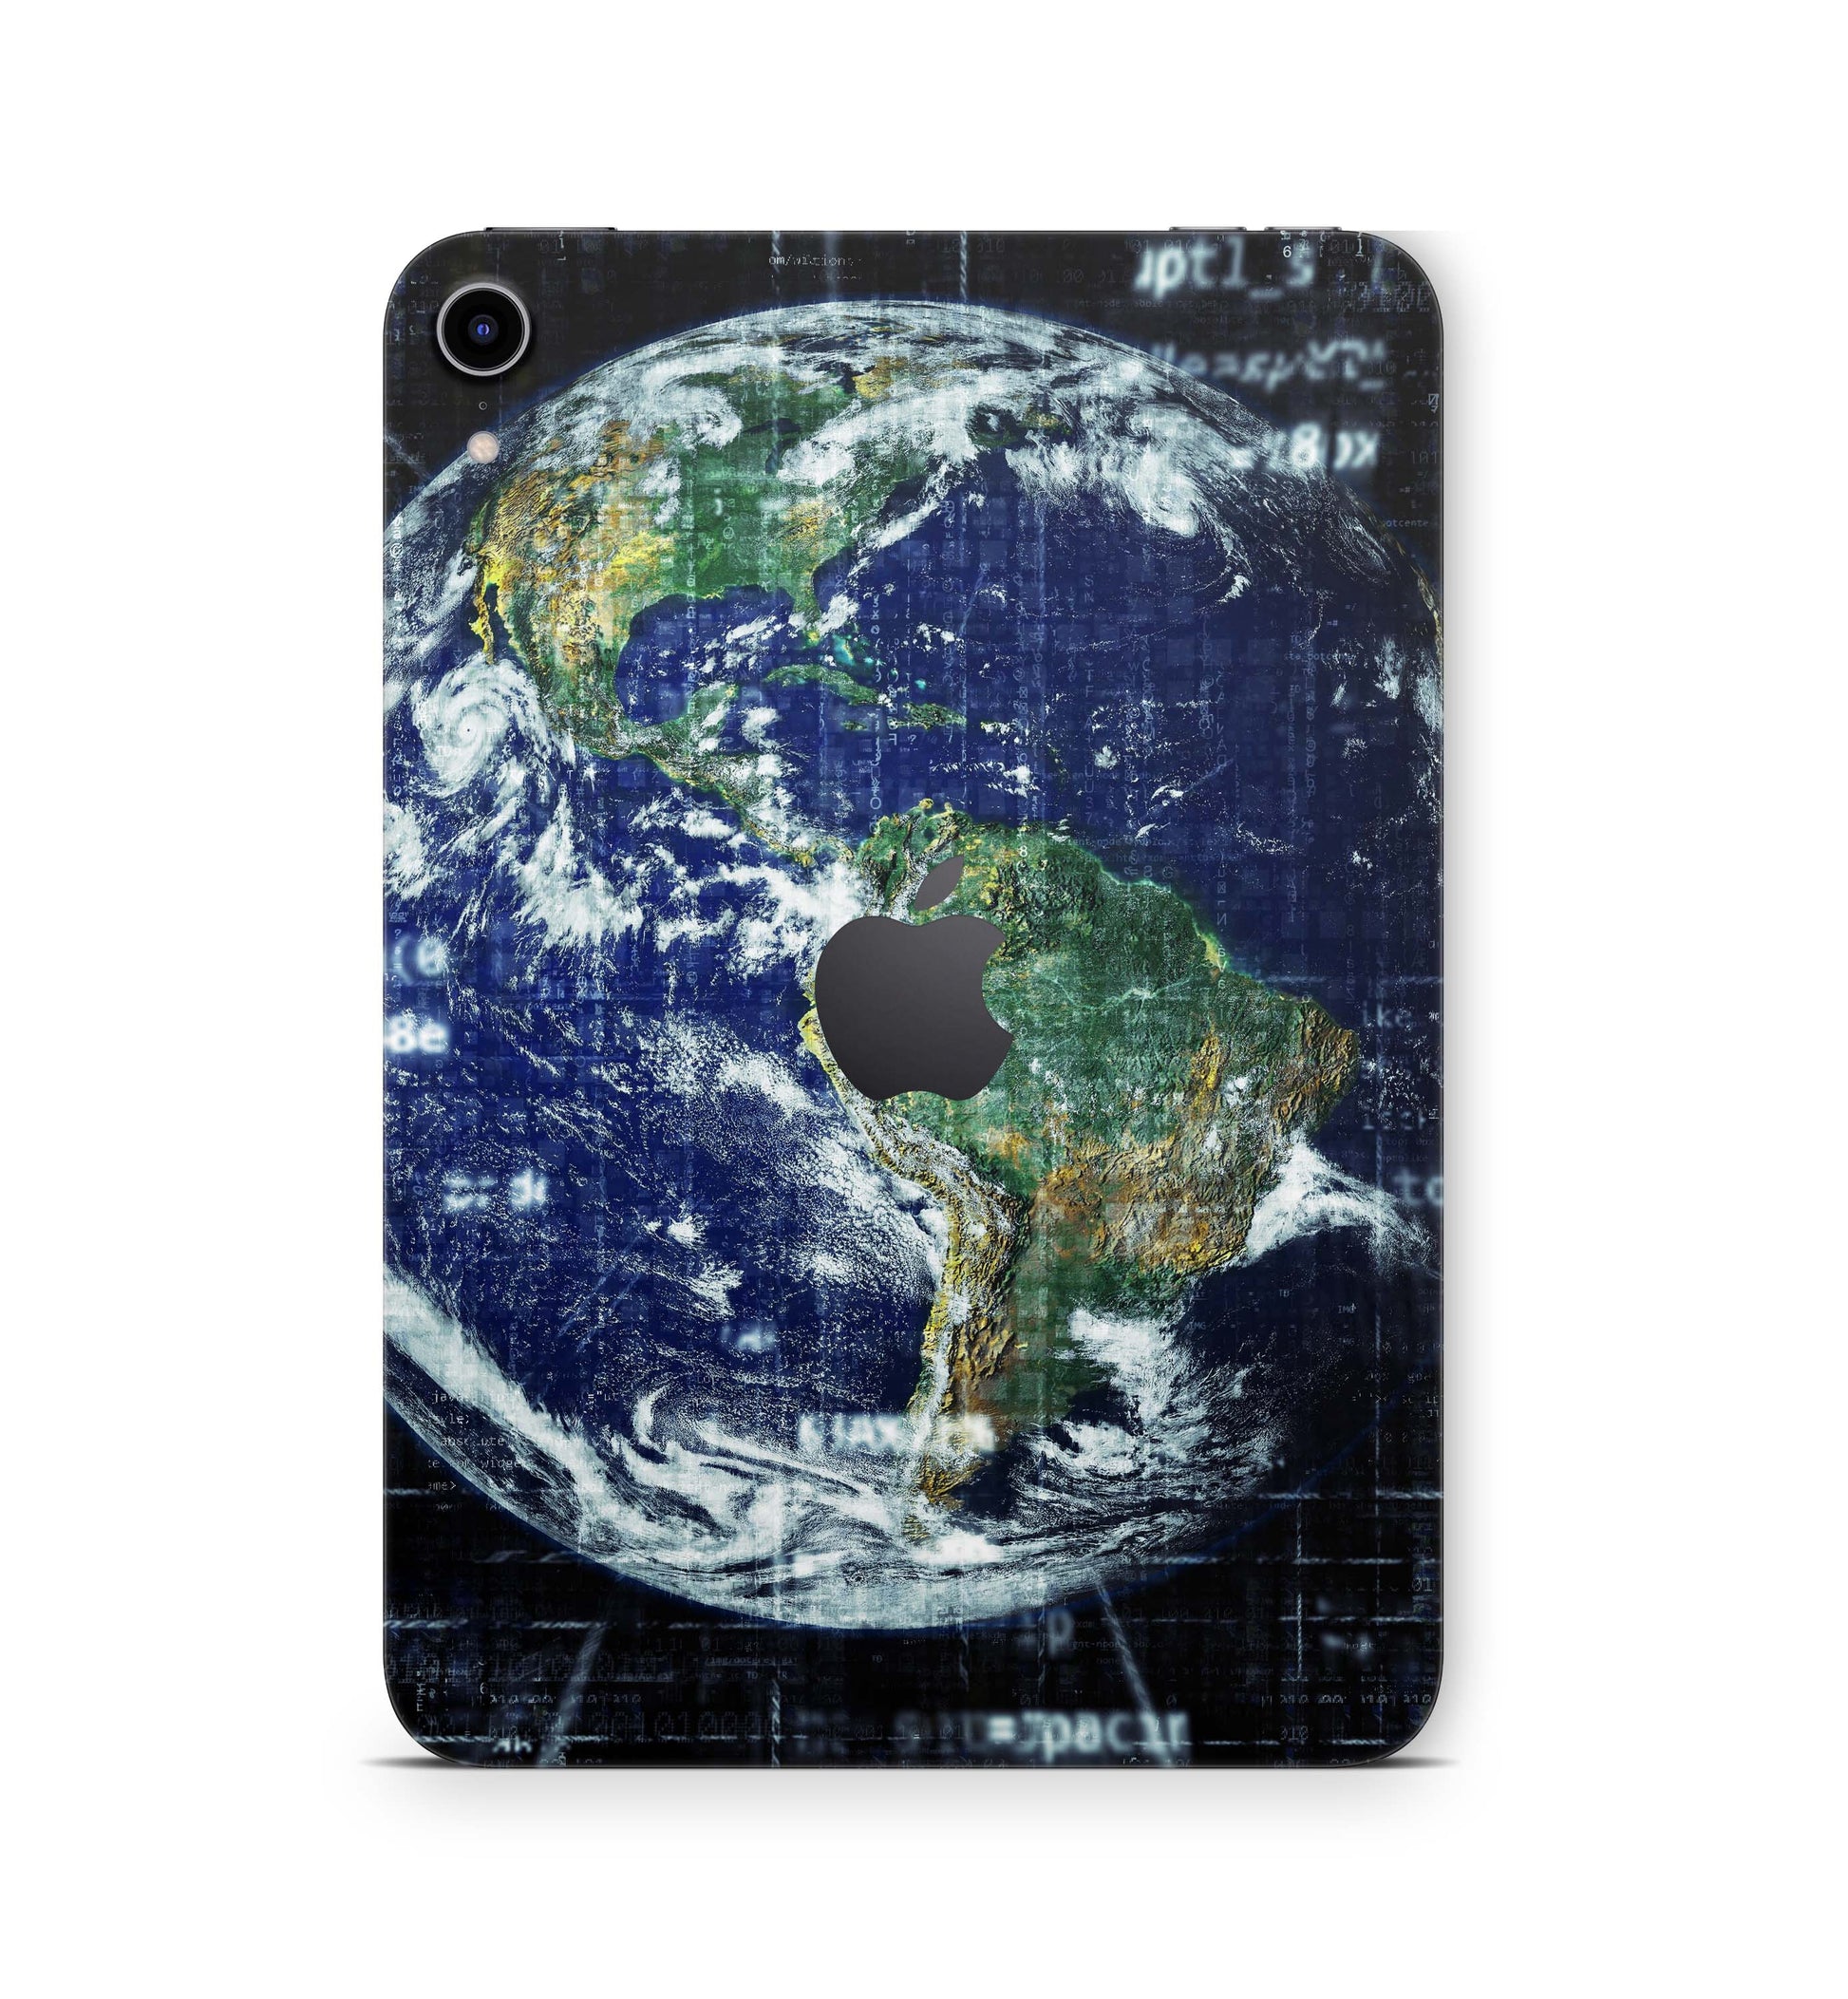 iPad Air Skin Design Cover Folie Vinyl Skins & Wraps für alle iPad Air Modelle Aufkleber Skins4u Digital-Earth  